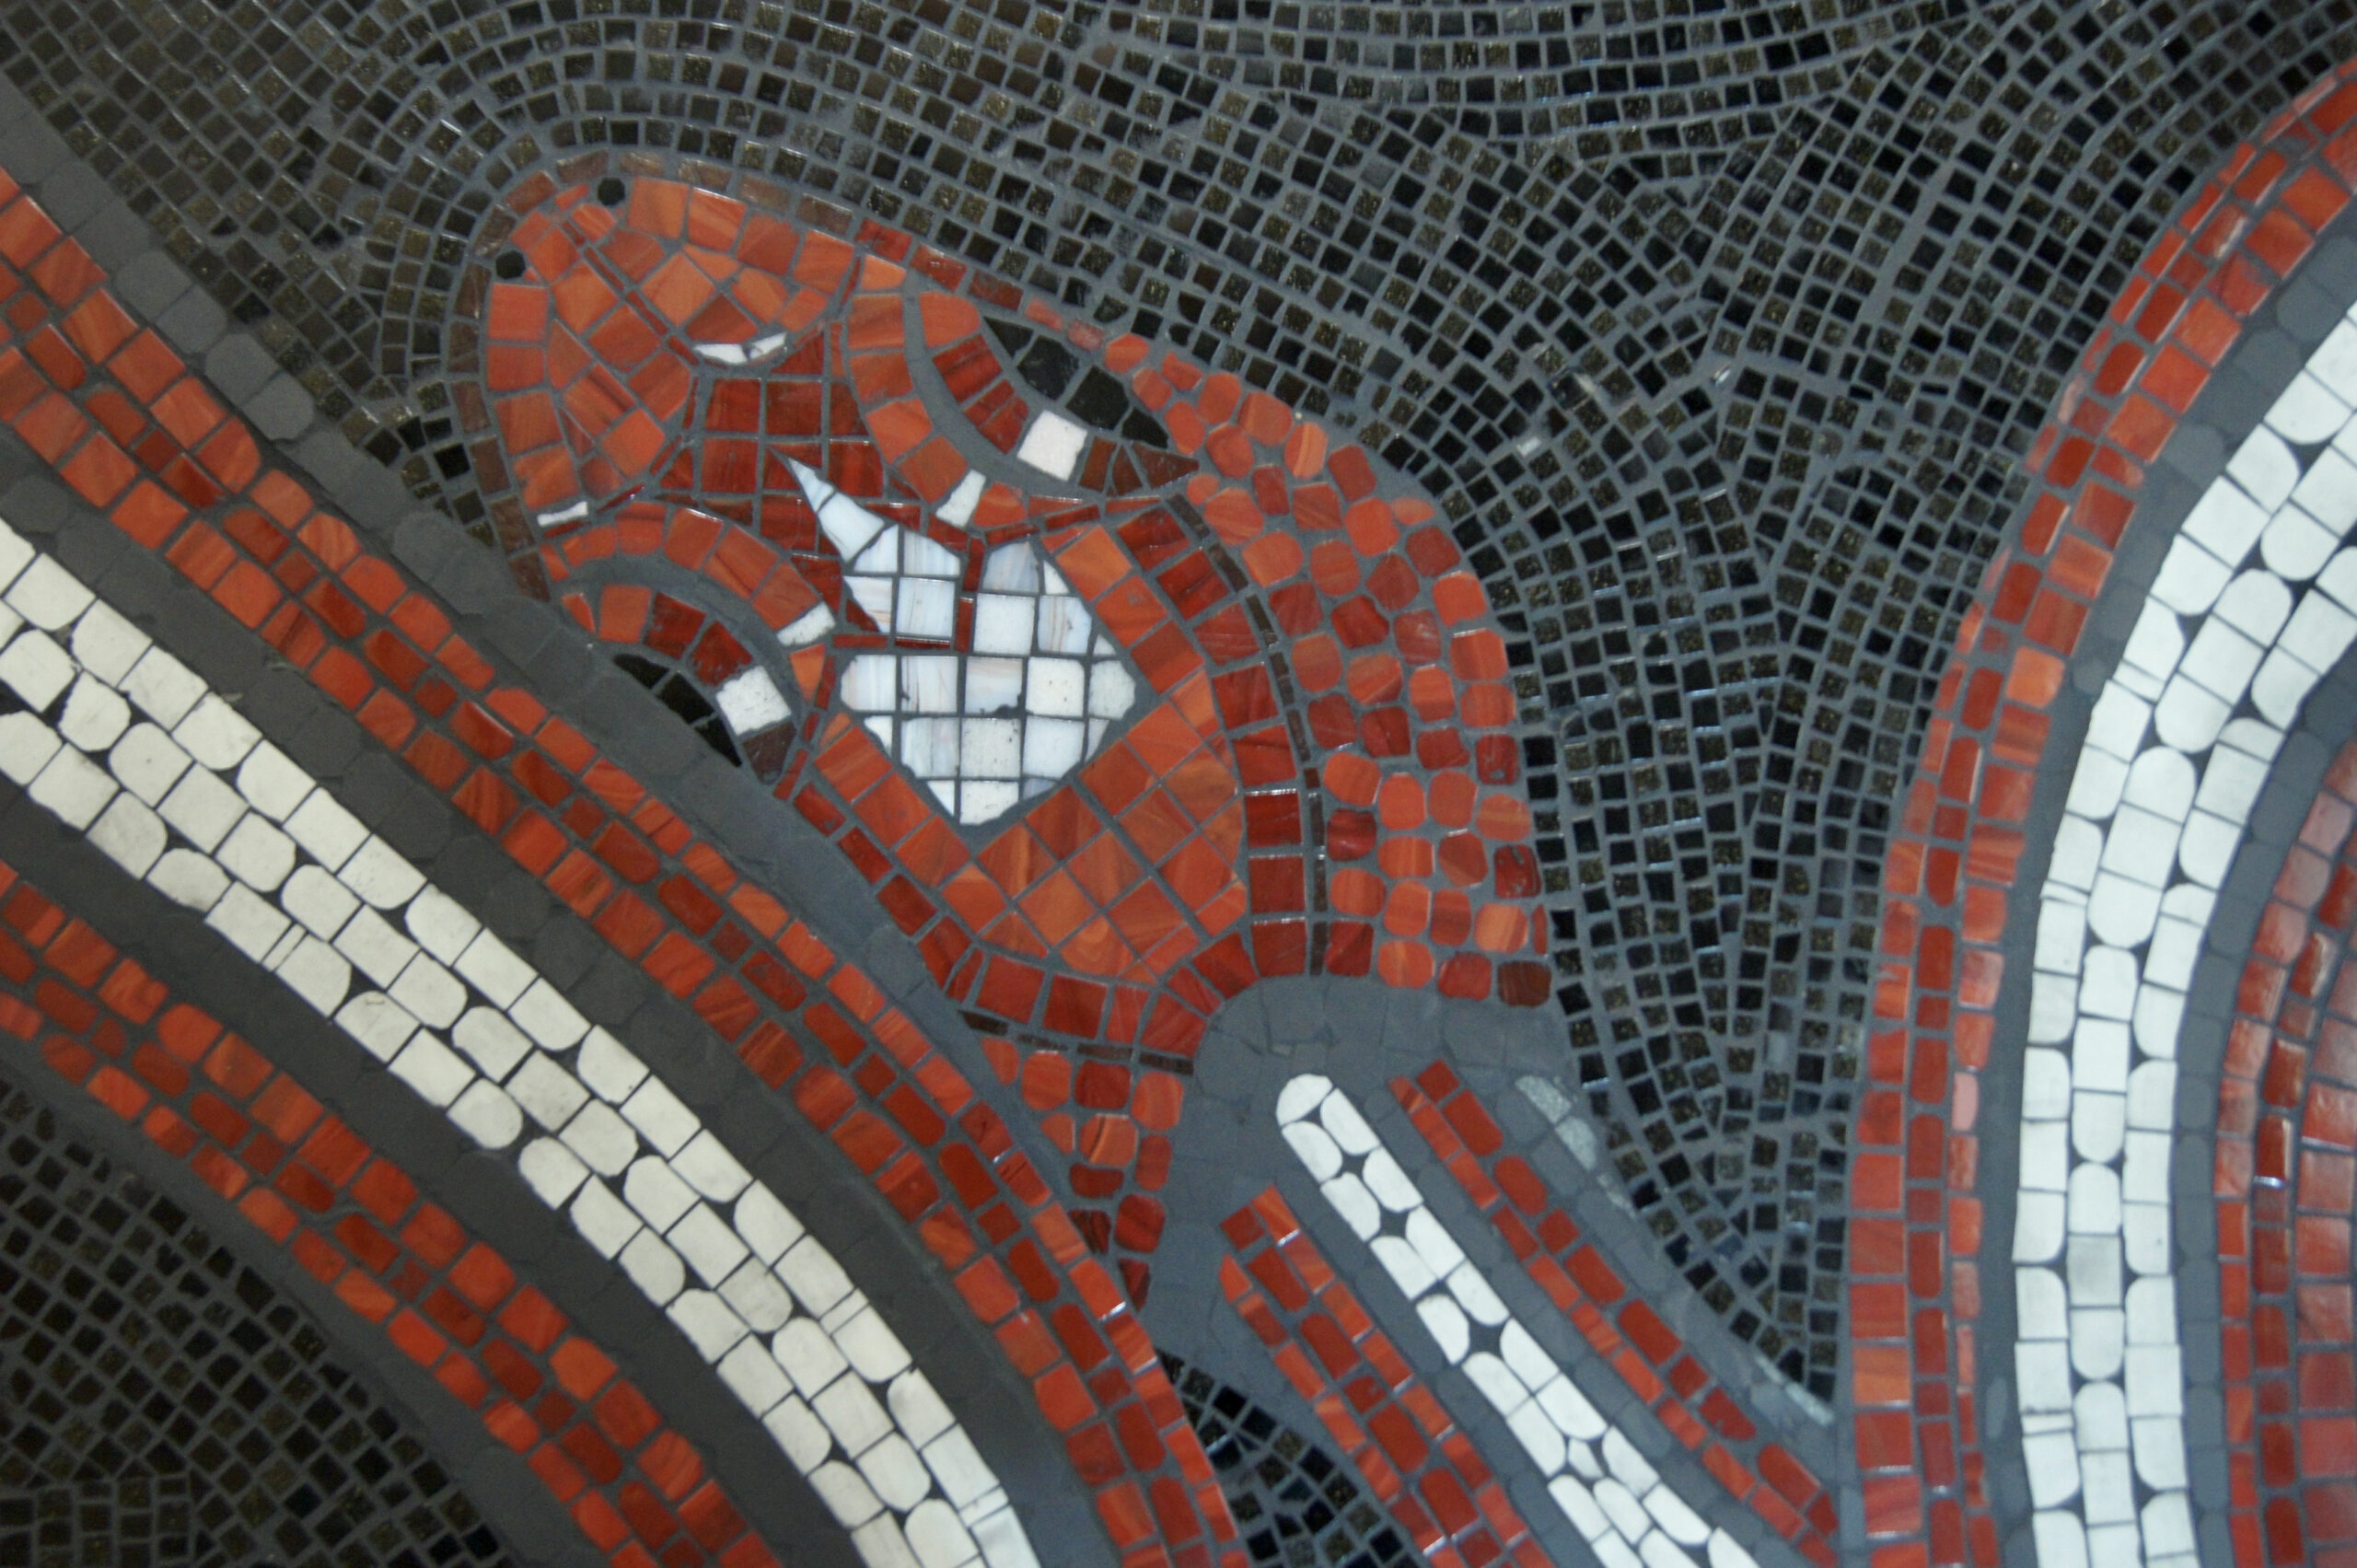 Snake Pit Mosaic Floor, Mayfair London